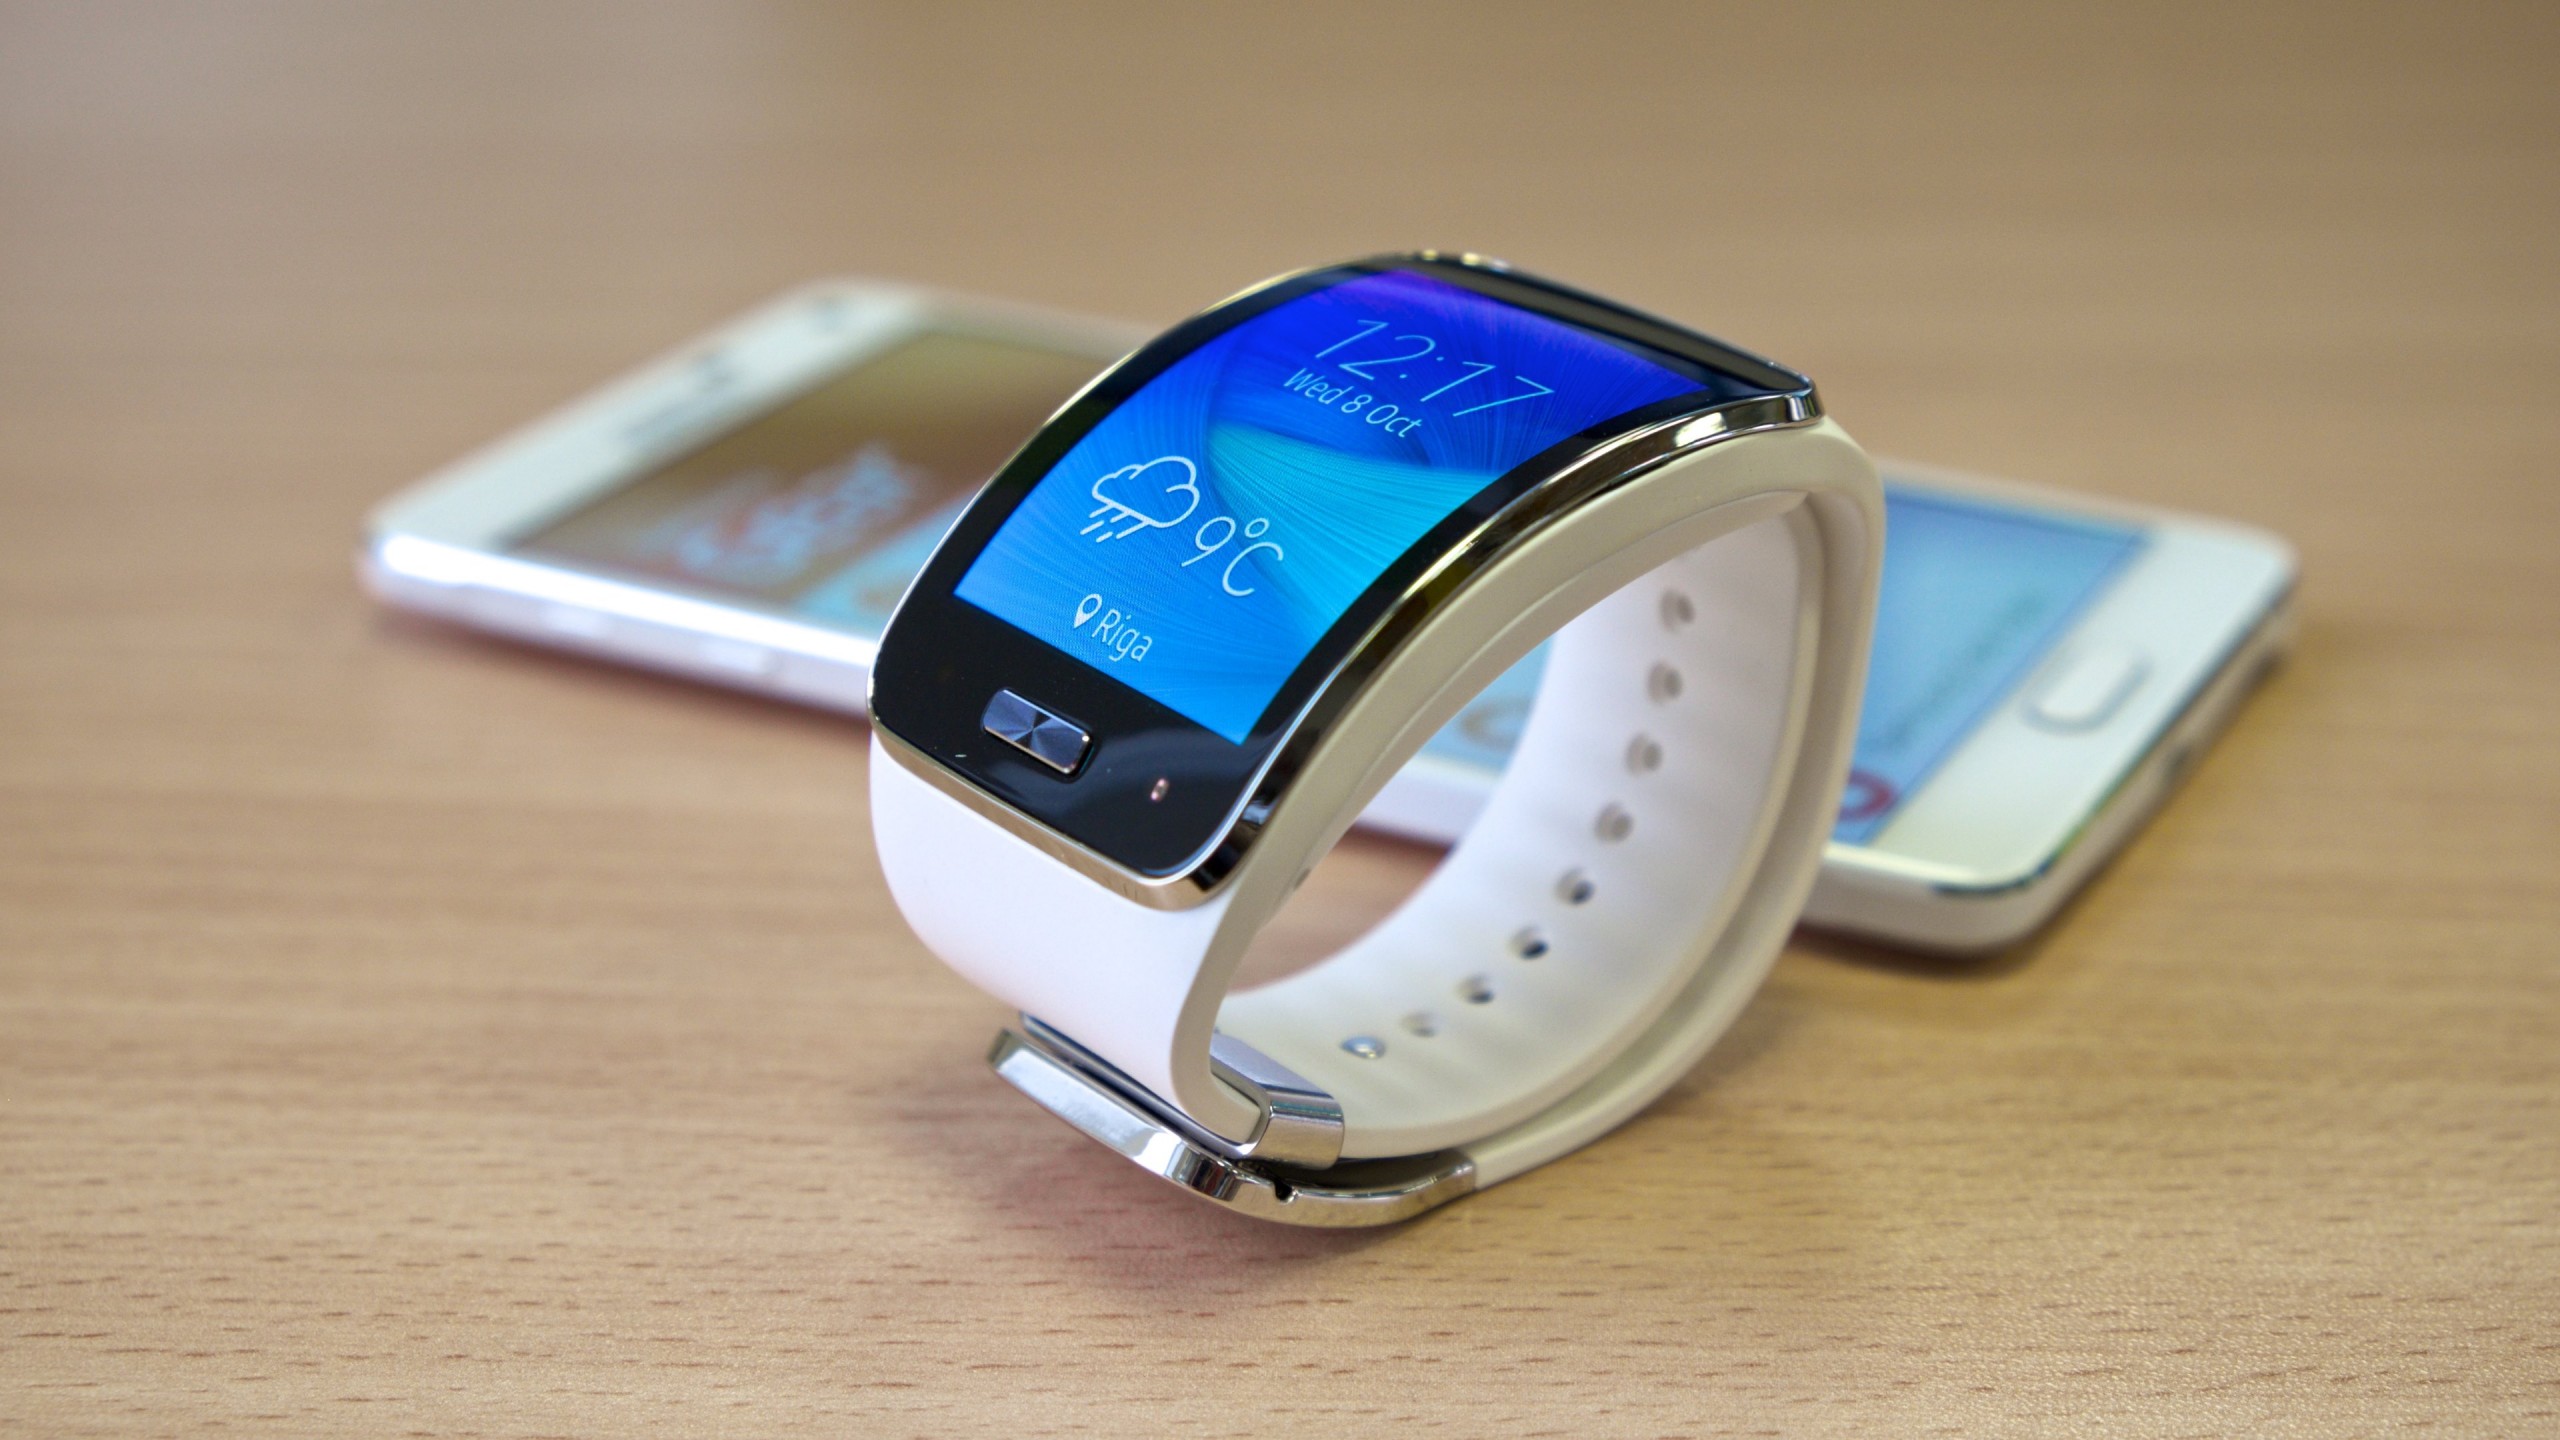 fondo de pantalla de smartwatch,artilugio,reloj,teléfono móvil,ver teléfono,dispositivo de comunicaciones portátil